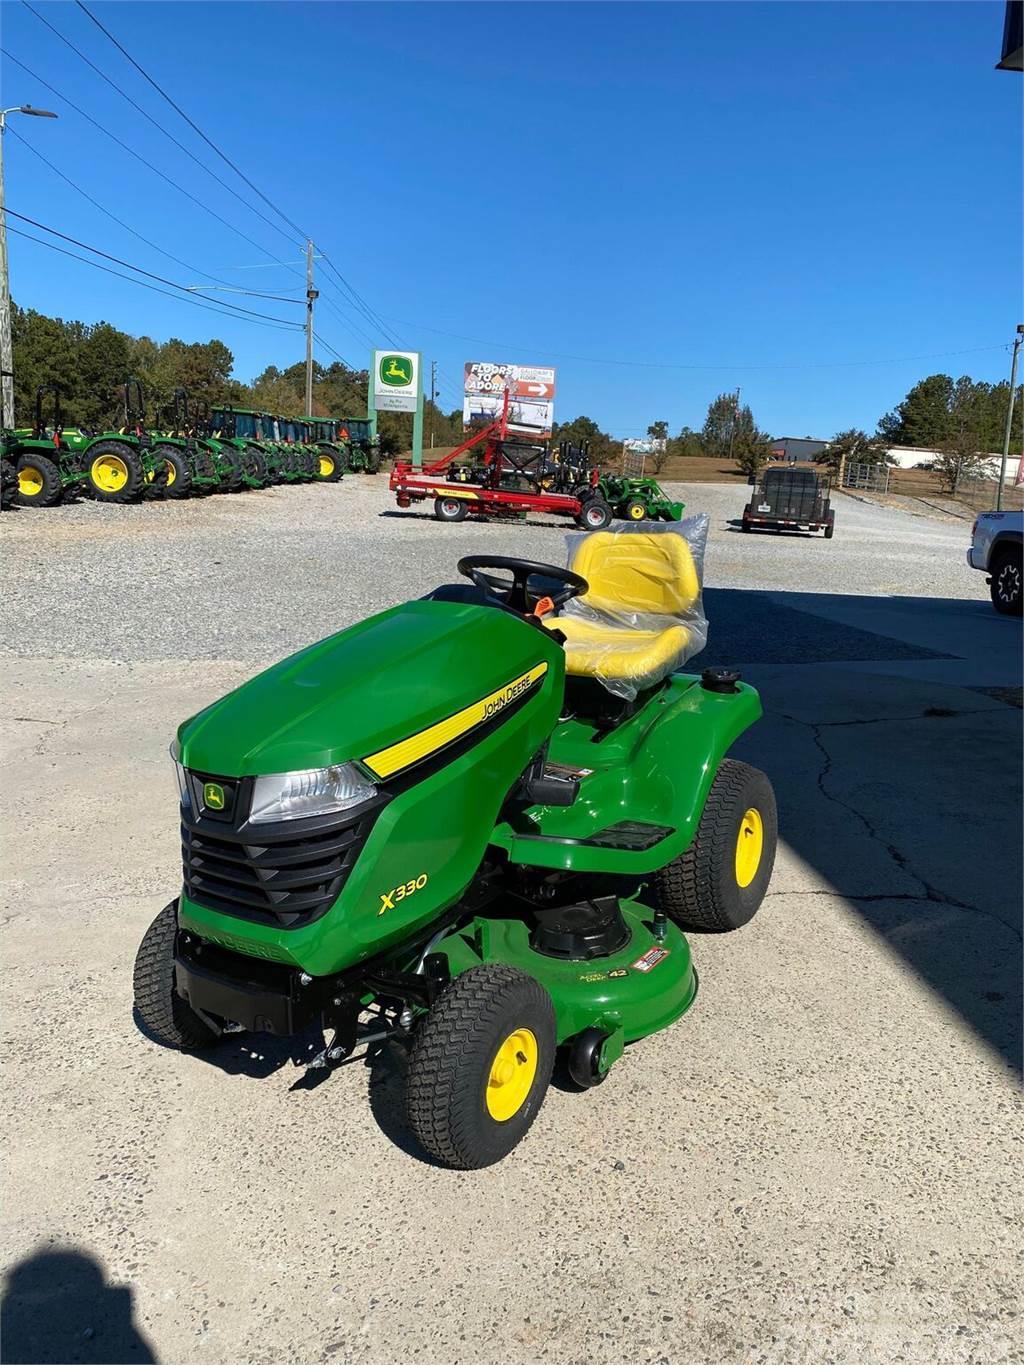 John Deere X330 Kompakt traktorok